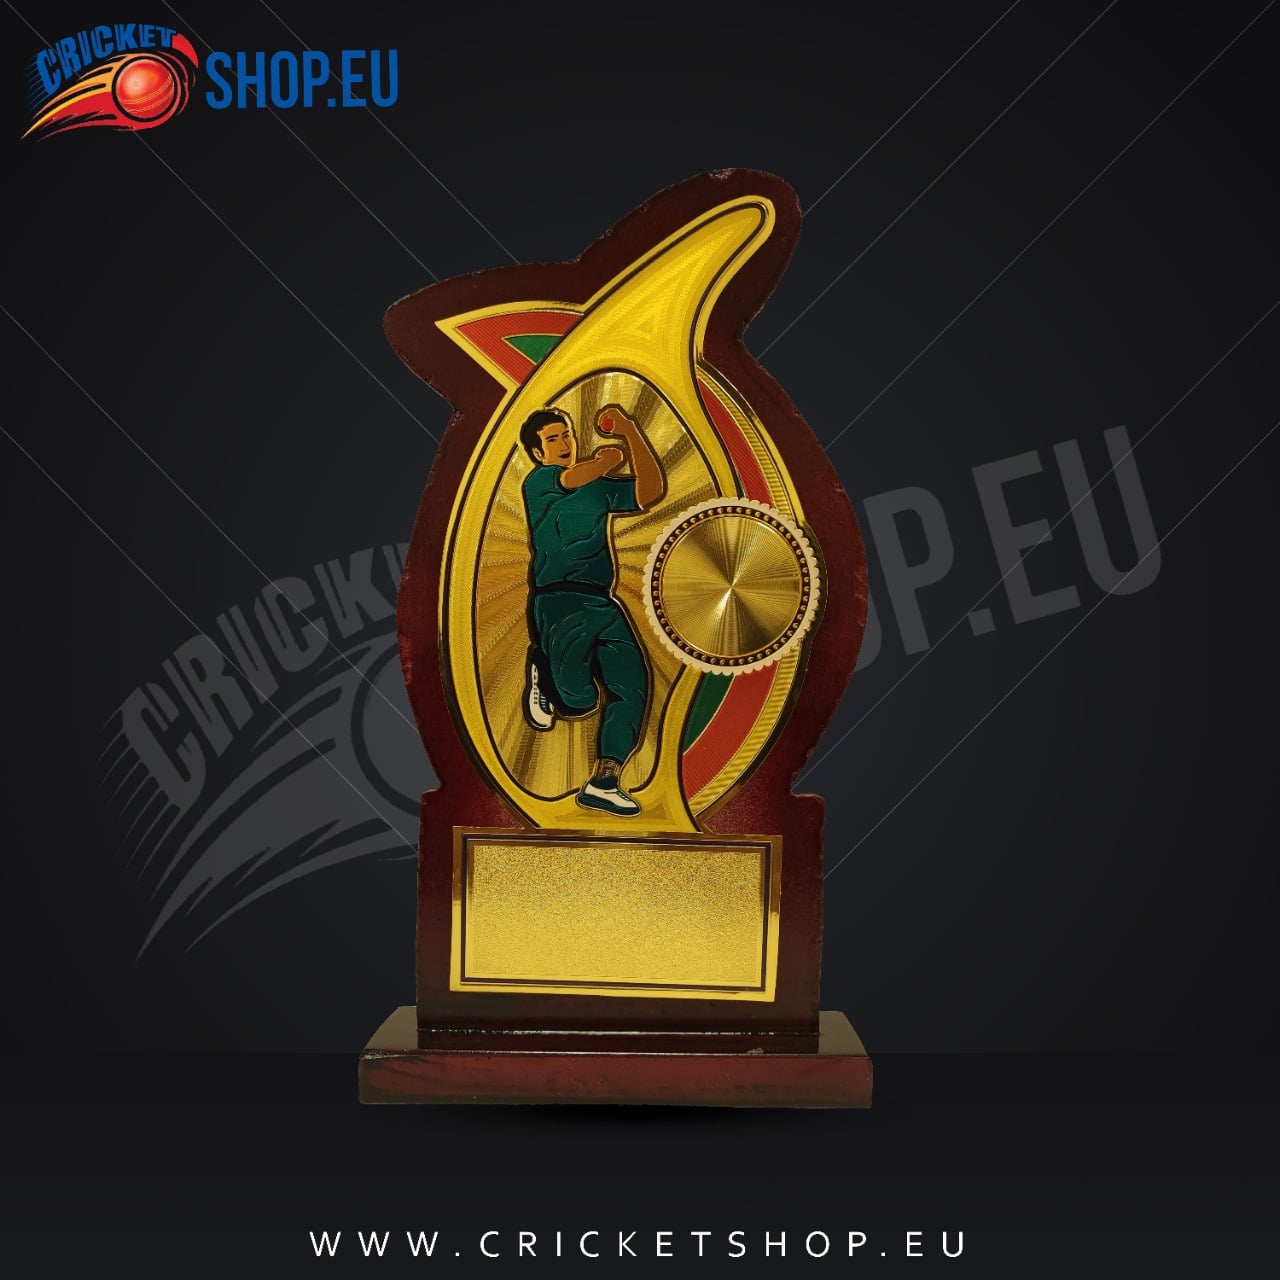 2022 Cricket Bowler Award Trophy